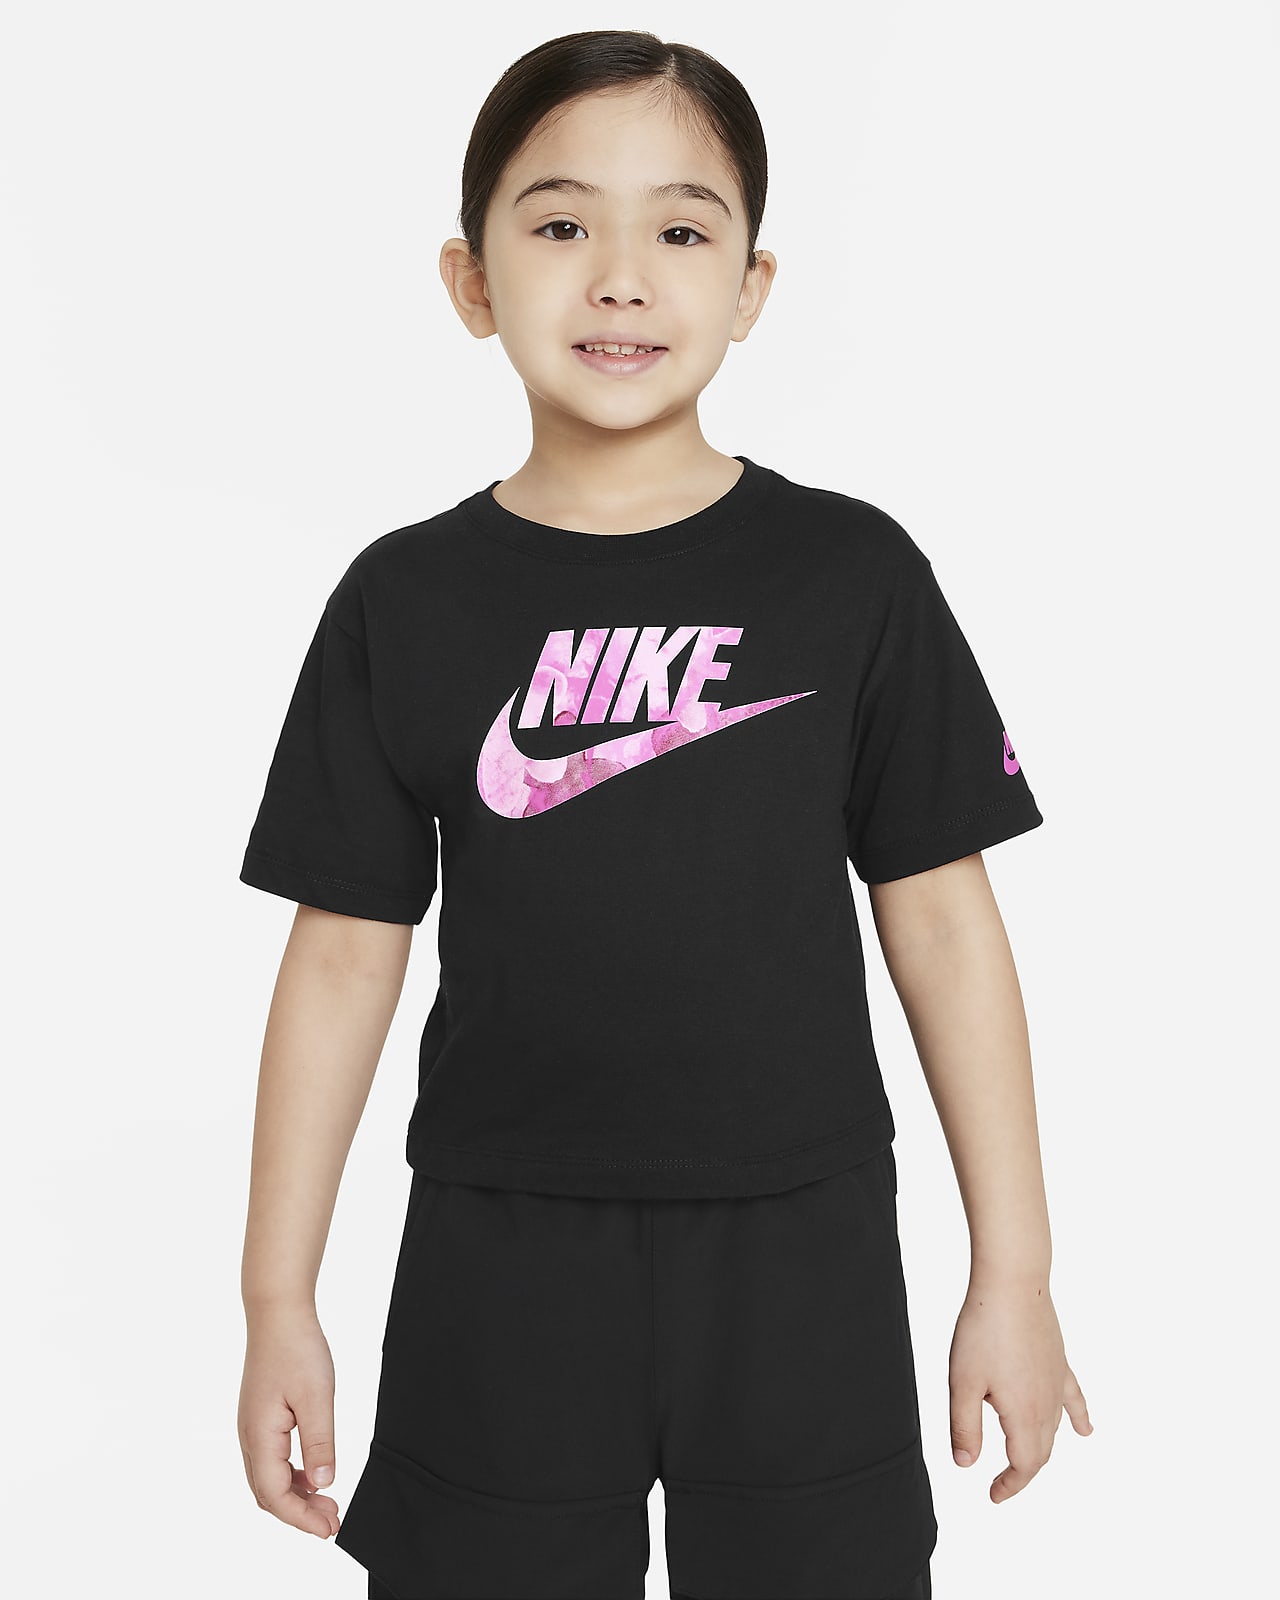 Nike Sci-Dye Boxy Tee T-Shirt für jüngere Kinder